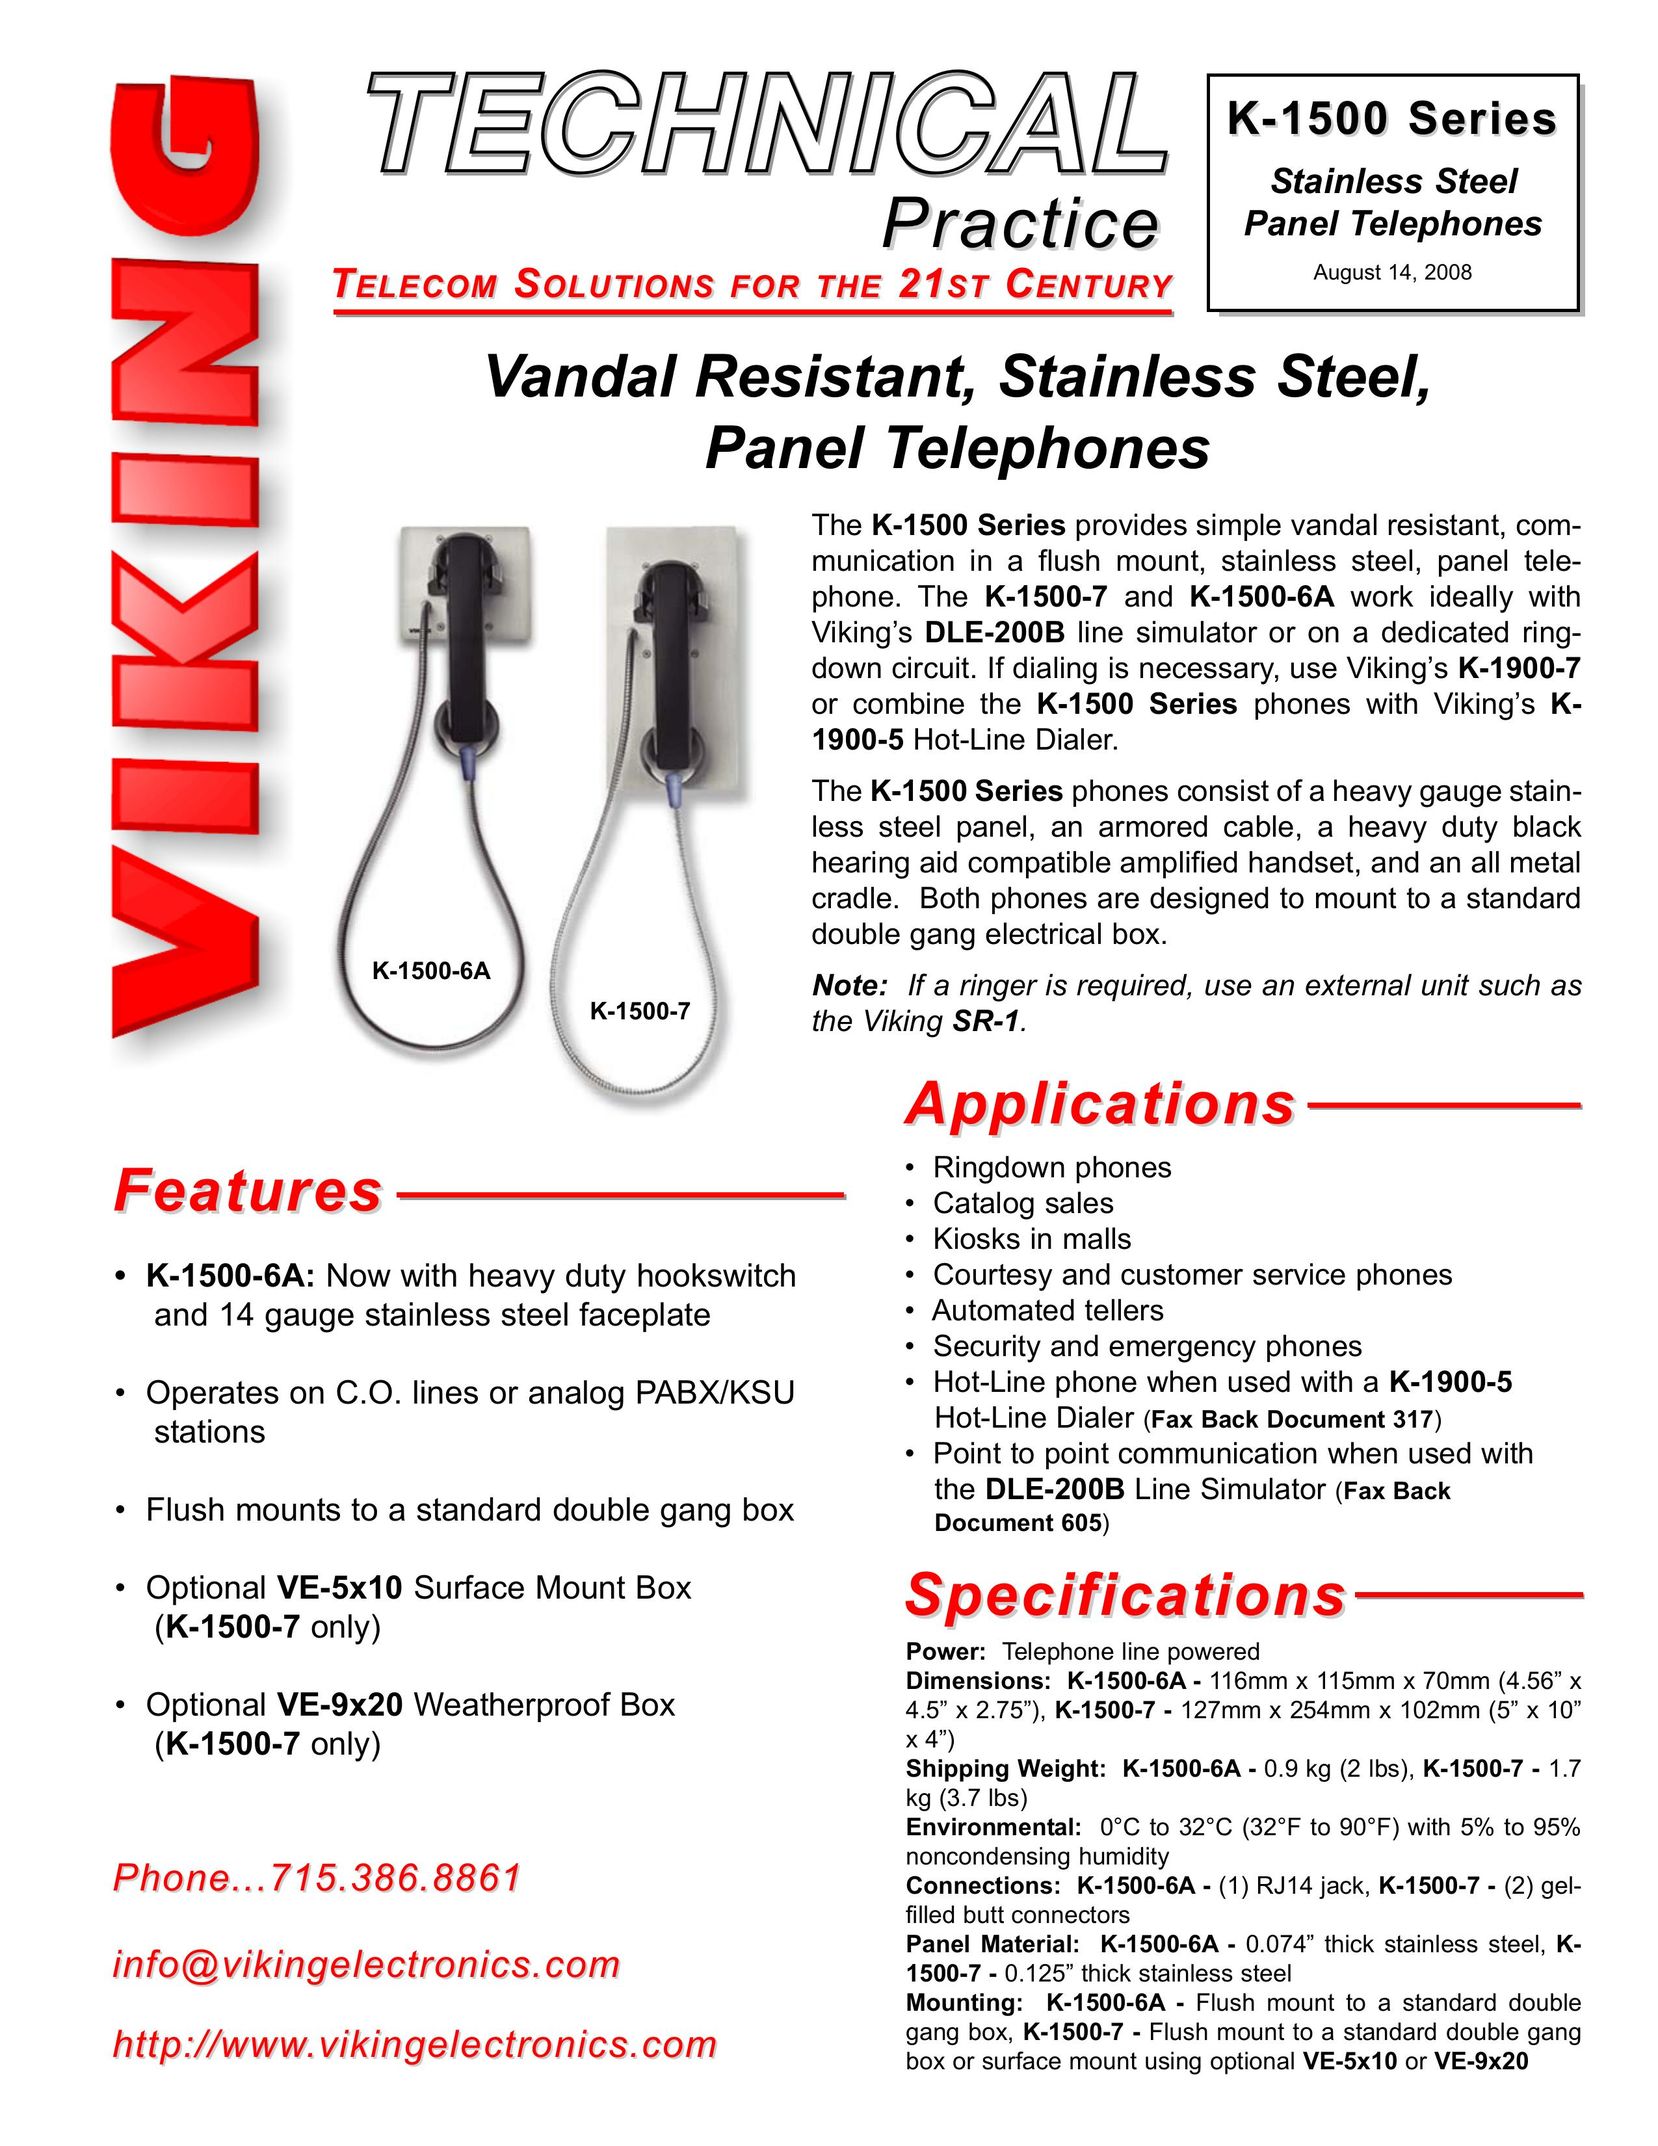 Viking Electronics K-1500 Series Telephone User Manual (Page 1)